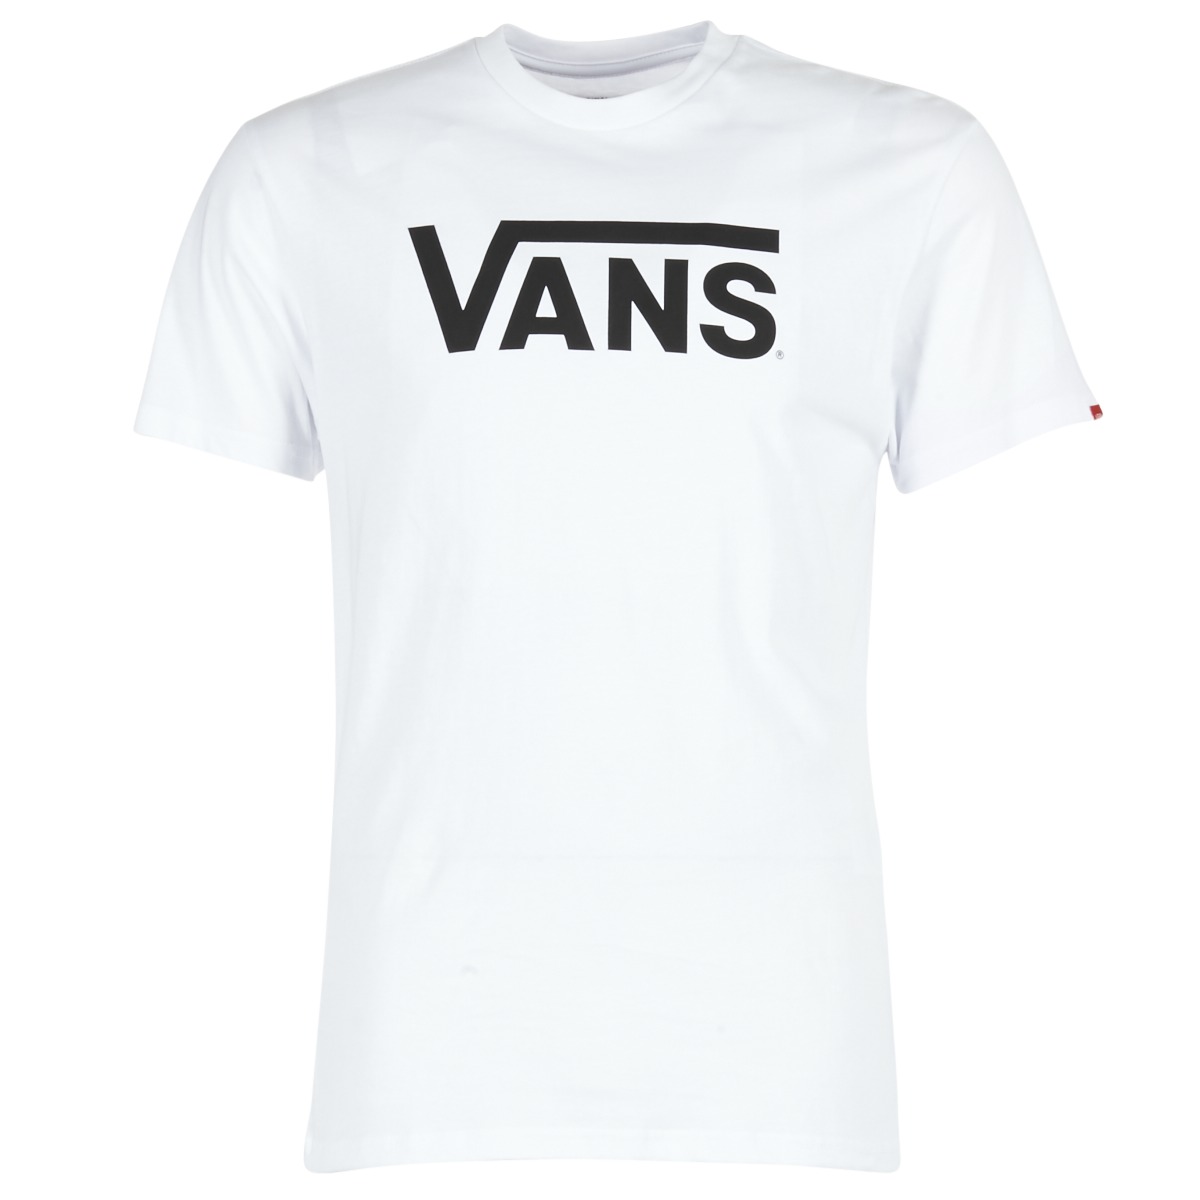 Vans / t-shirt Classic in wit